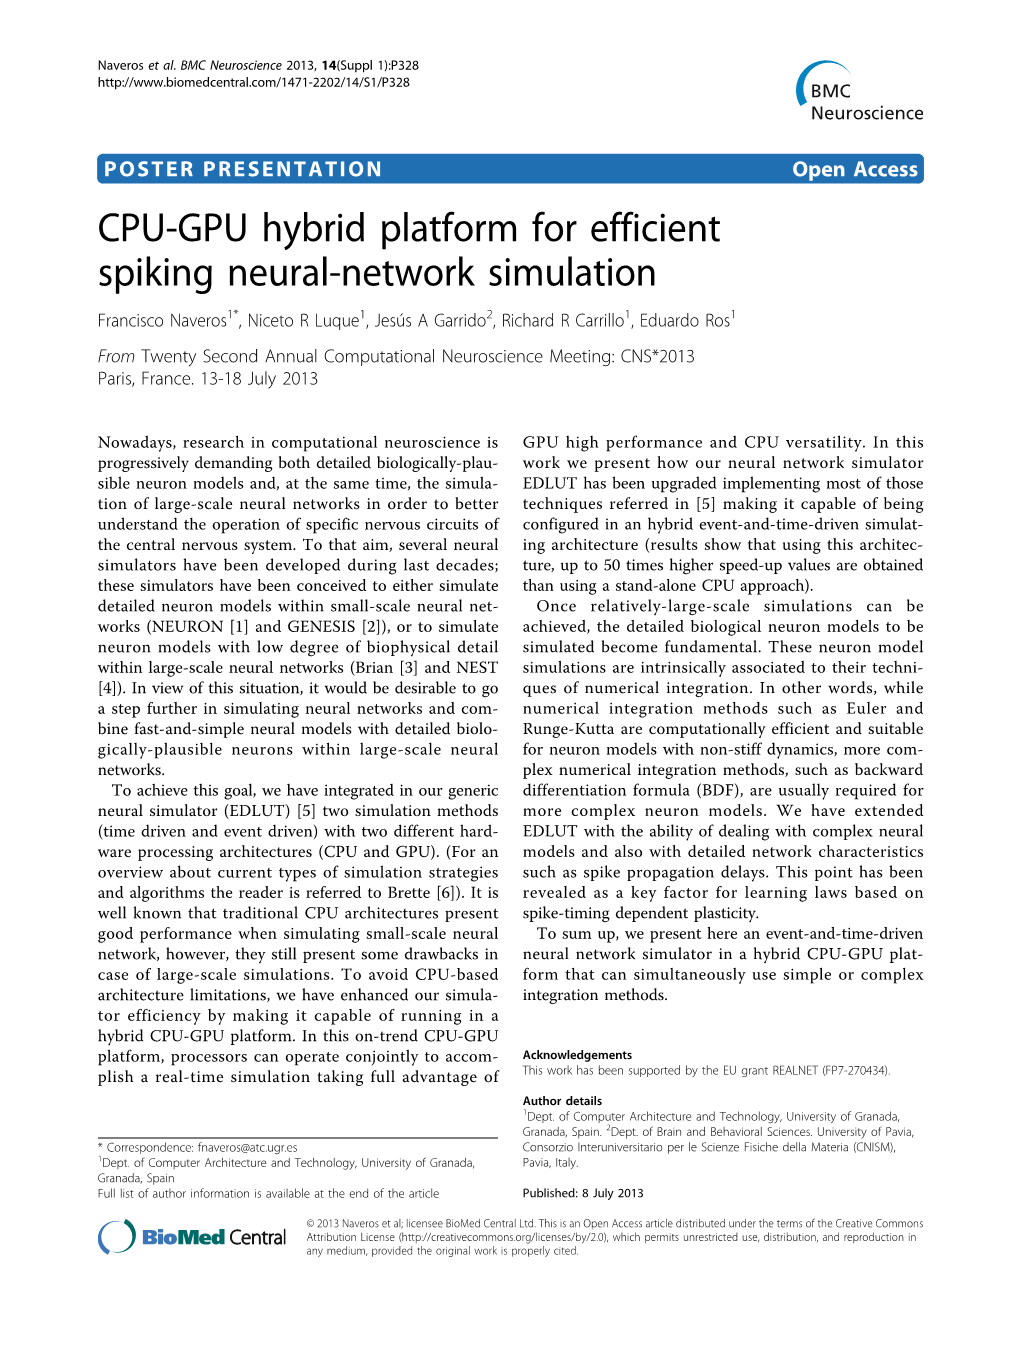 CPU-GPU Hybrid Platform for Efficient Spiking Neural-Network Simulation